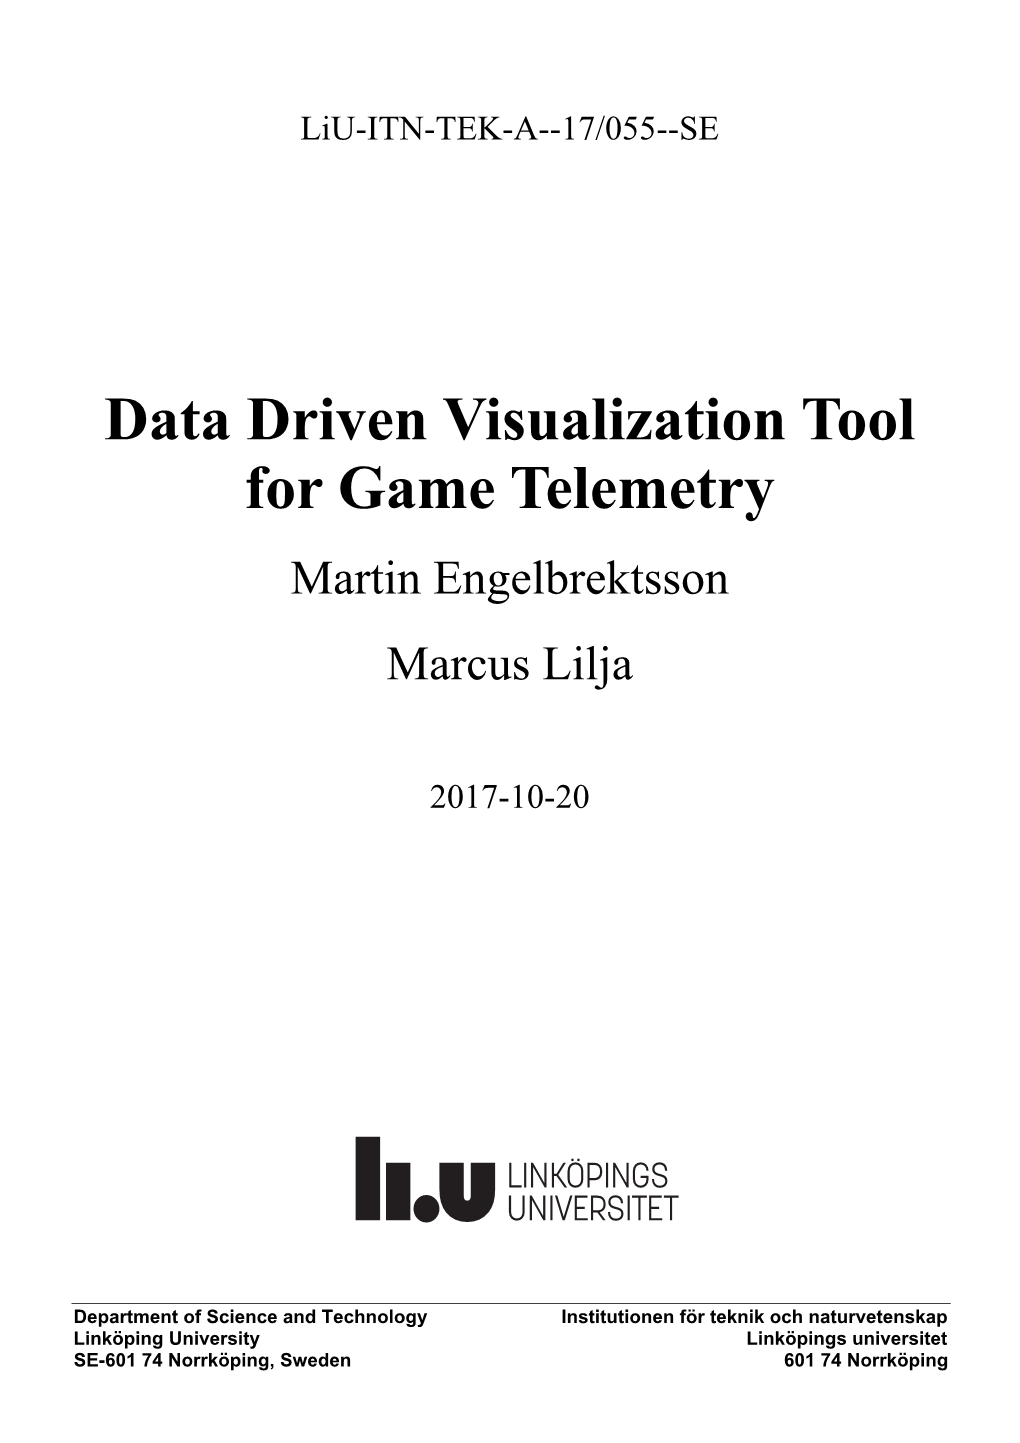 Data Driven Visualization Tool for Game Telemetry Martin Engelbrektsson Marcus Lilja